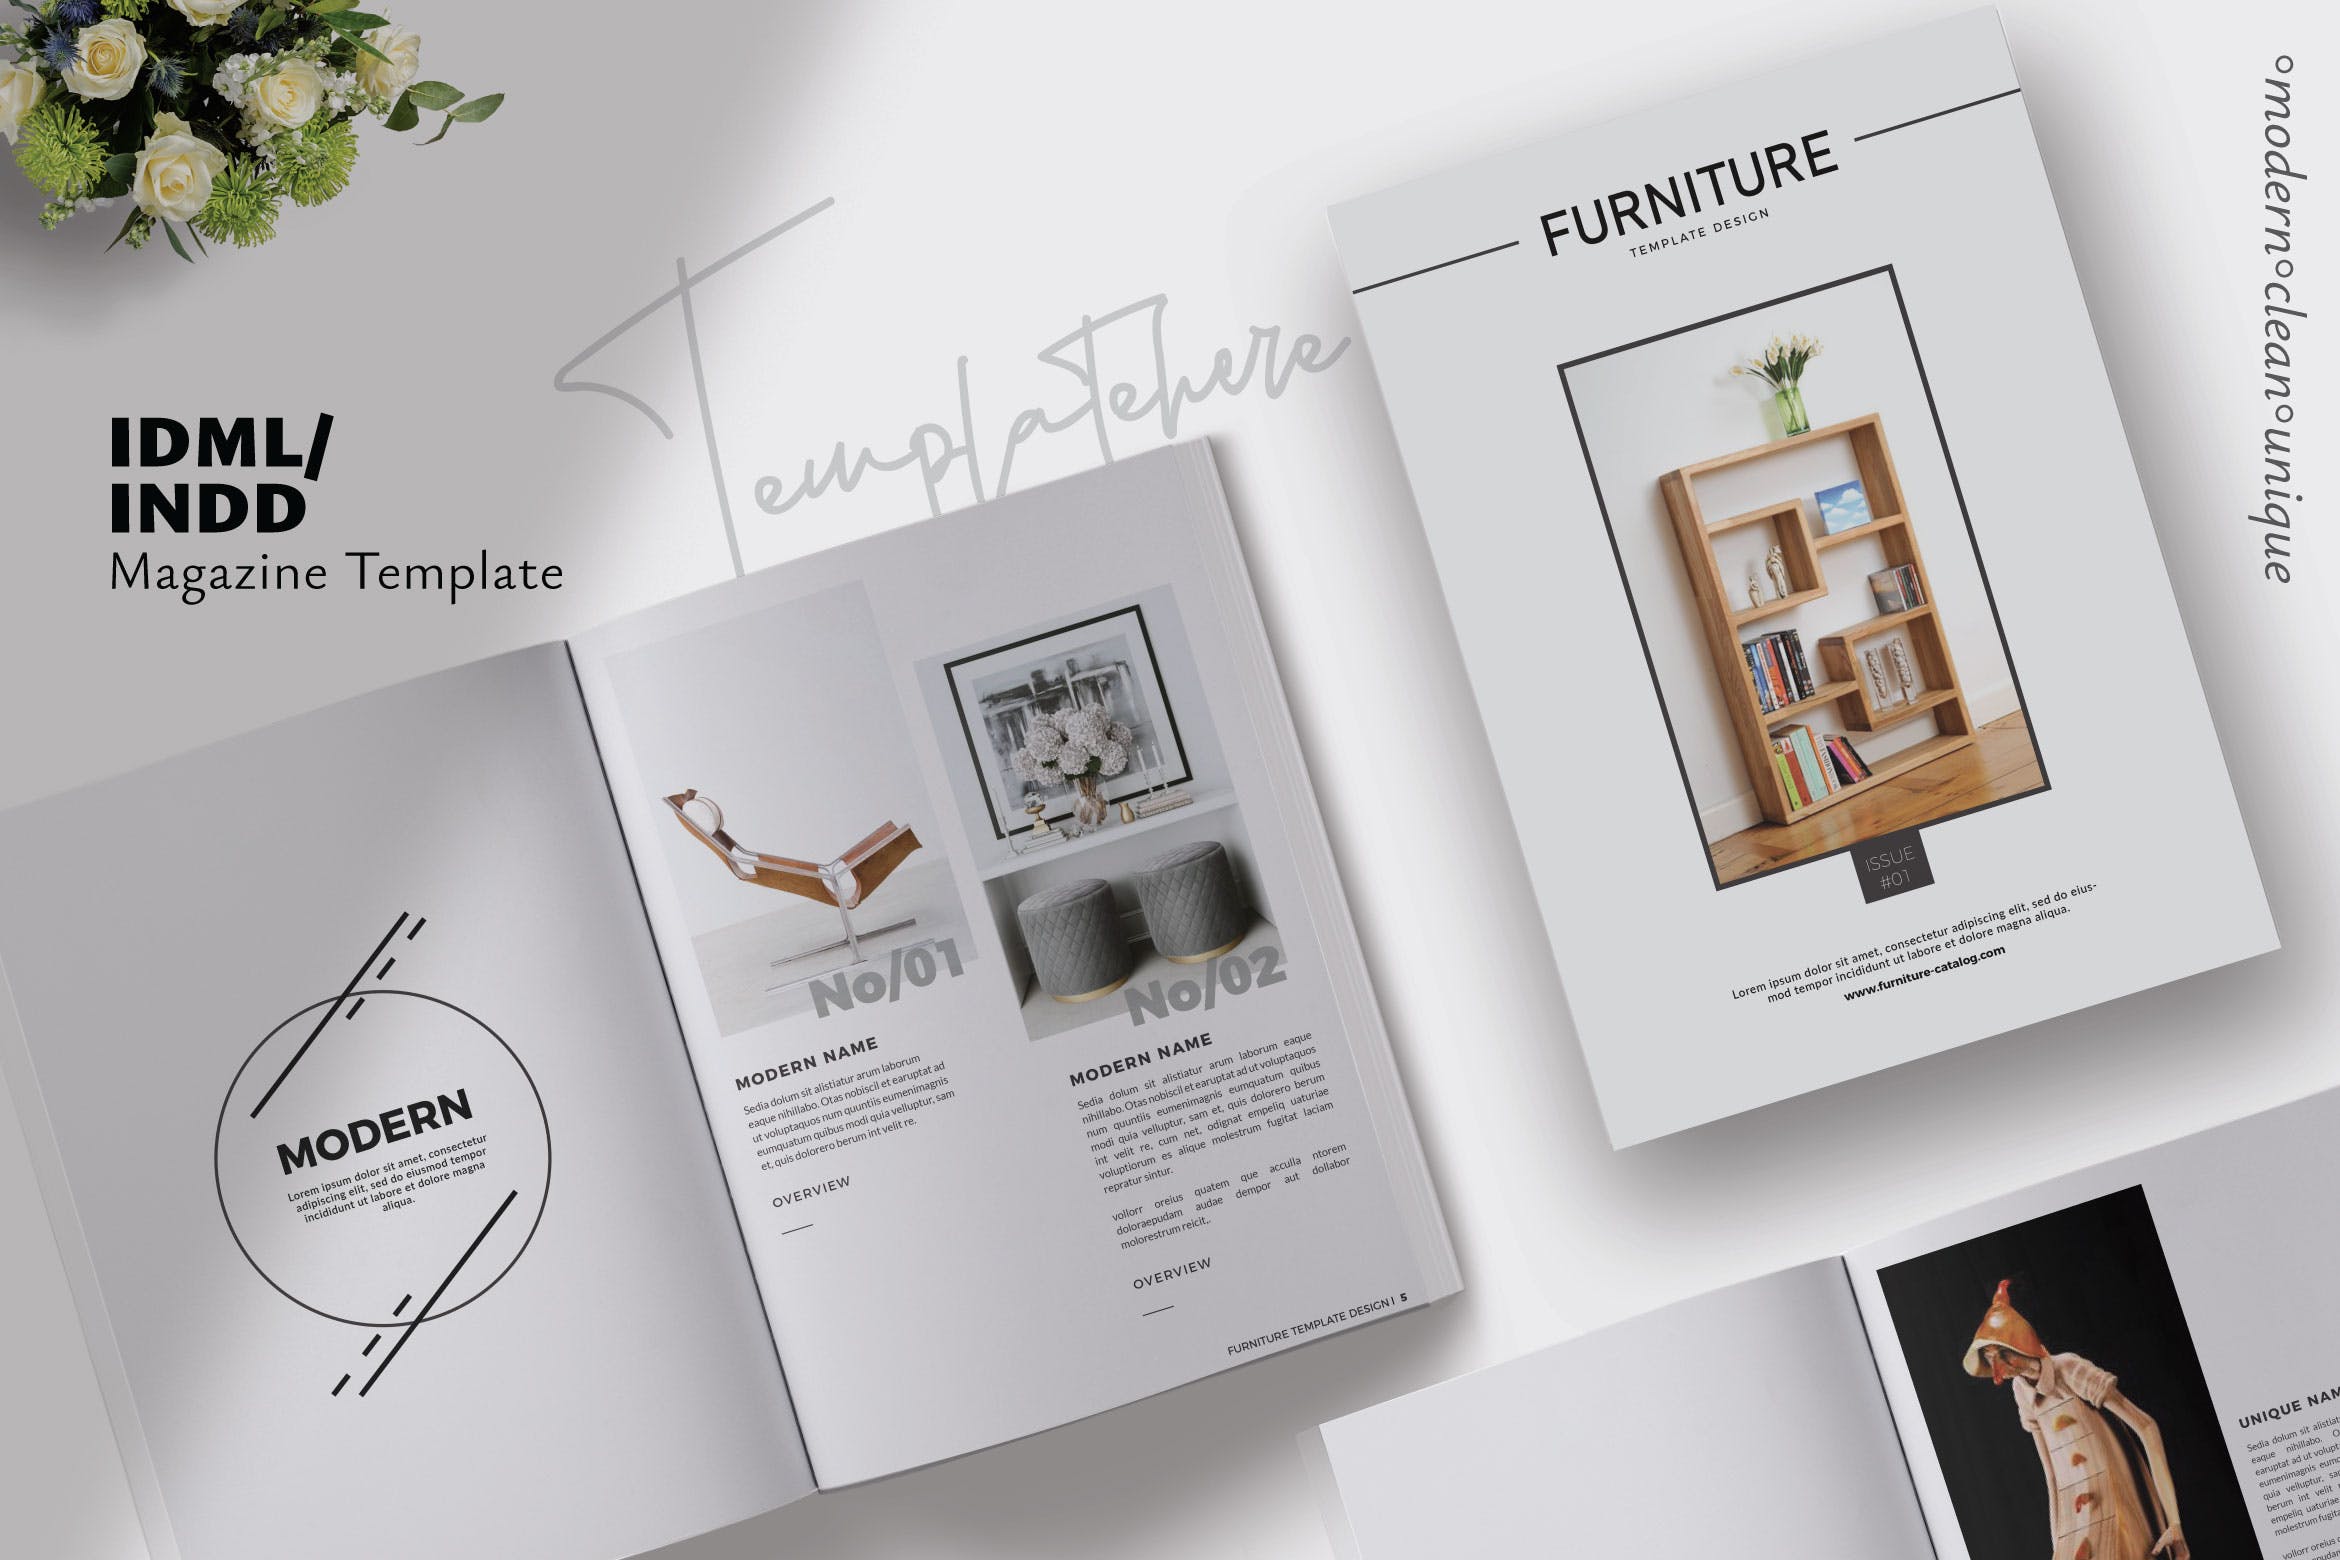 现代家具品牌产品画册Lookbook排版设计模板 Furniture Collection Lookbook插图